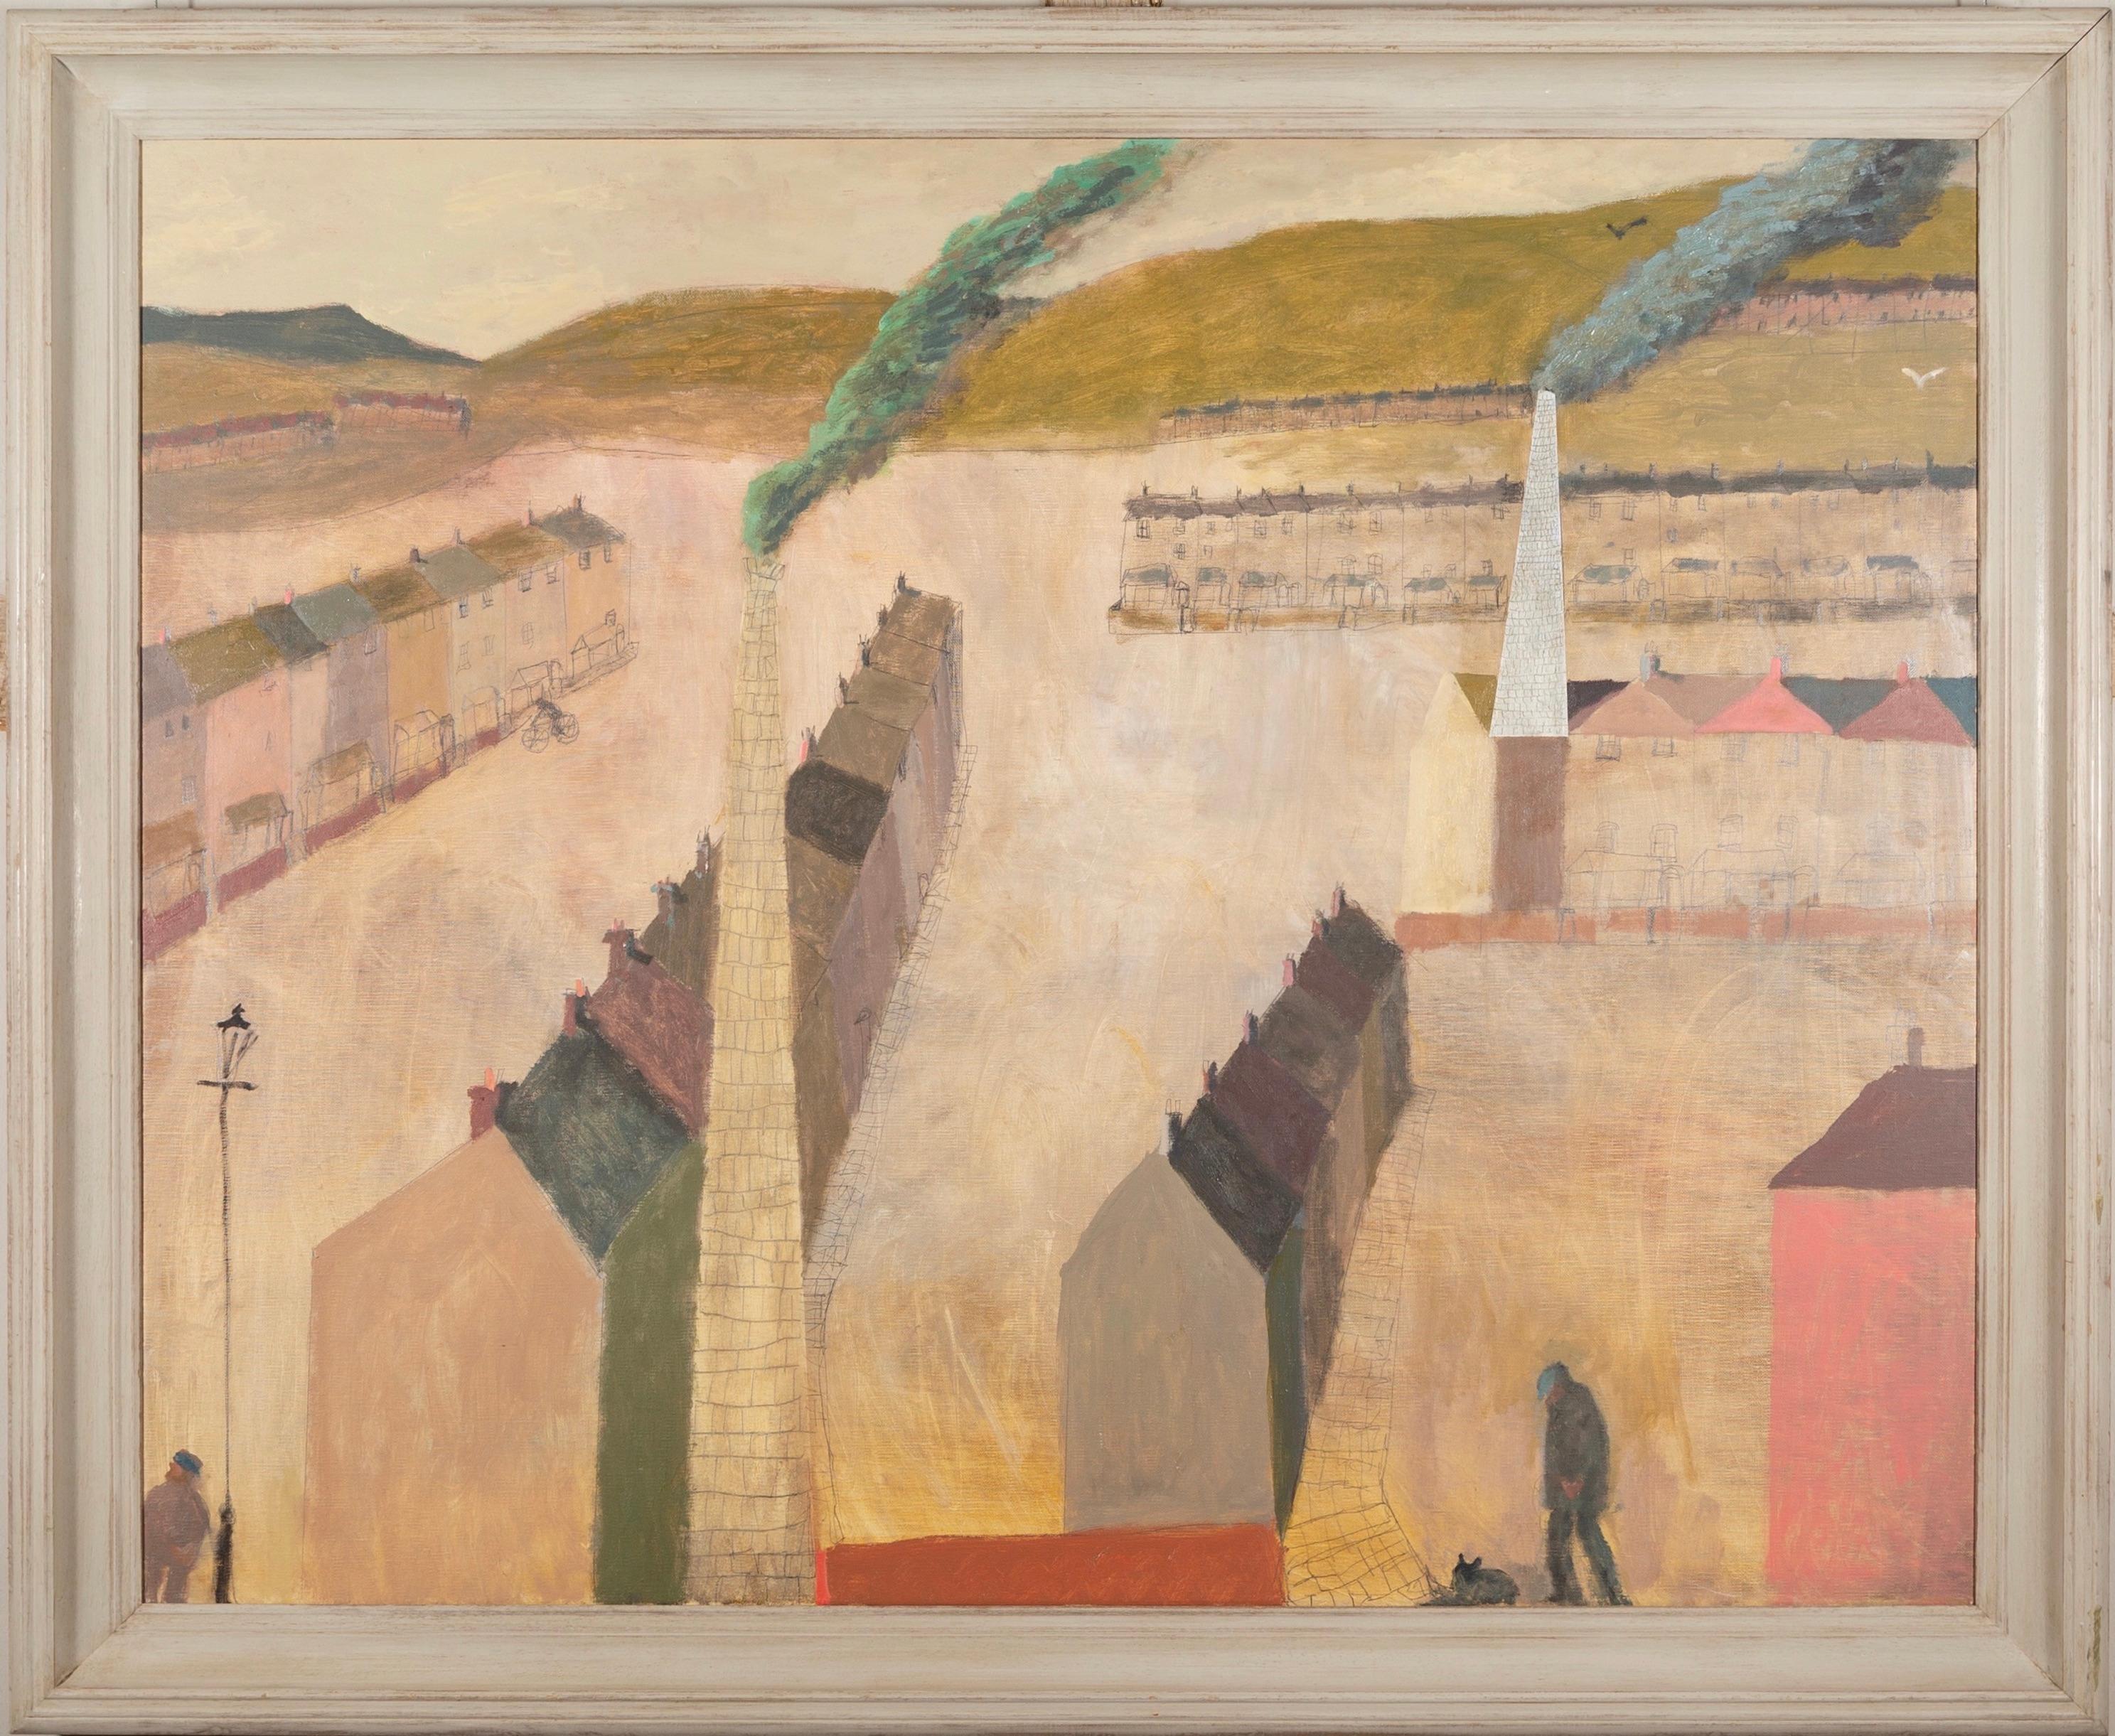 Nicholas Turner Industrial Town, Chimneys and Bike, 2020 landscape oil painting